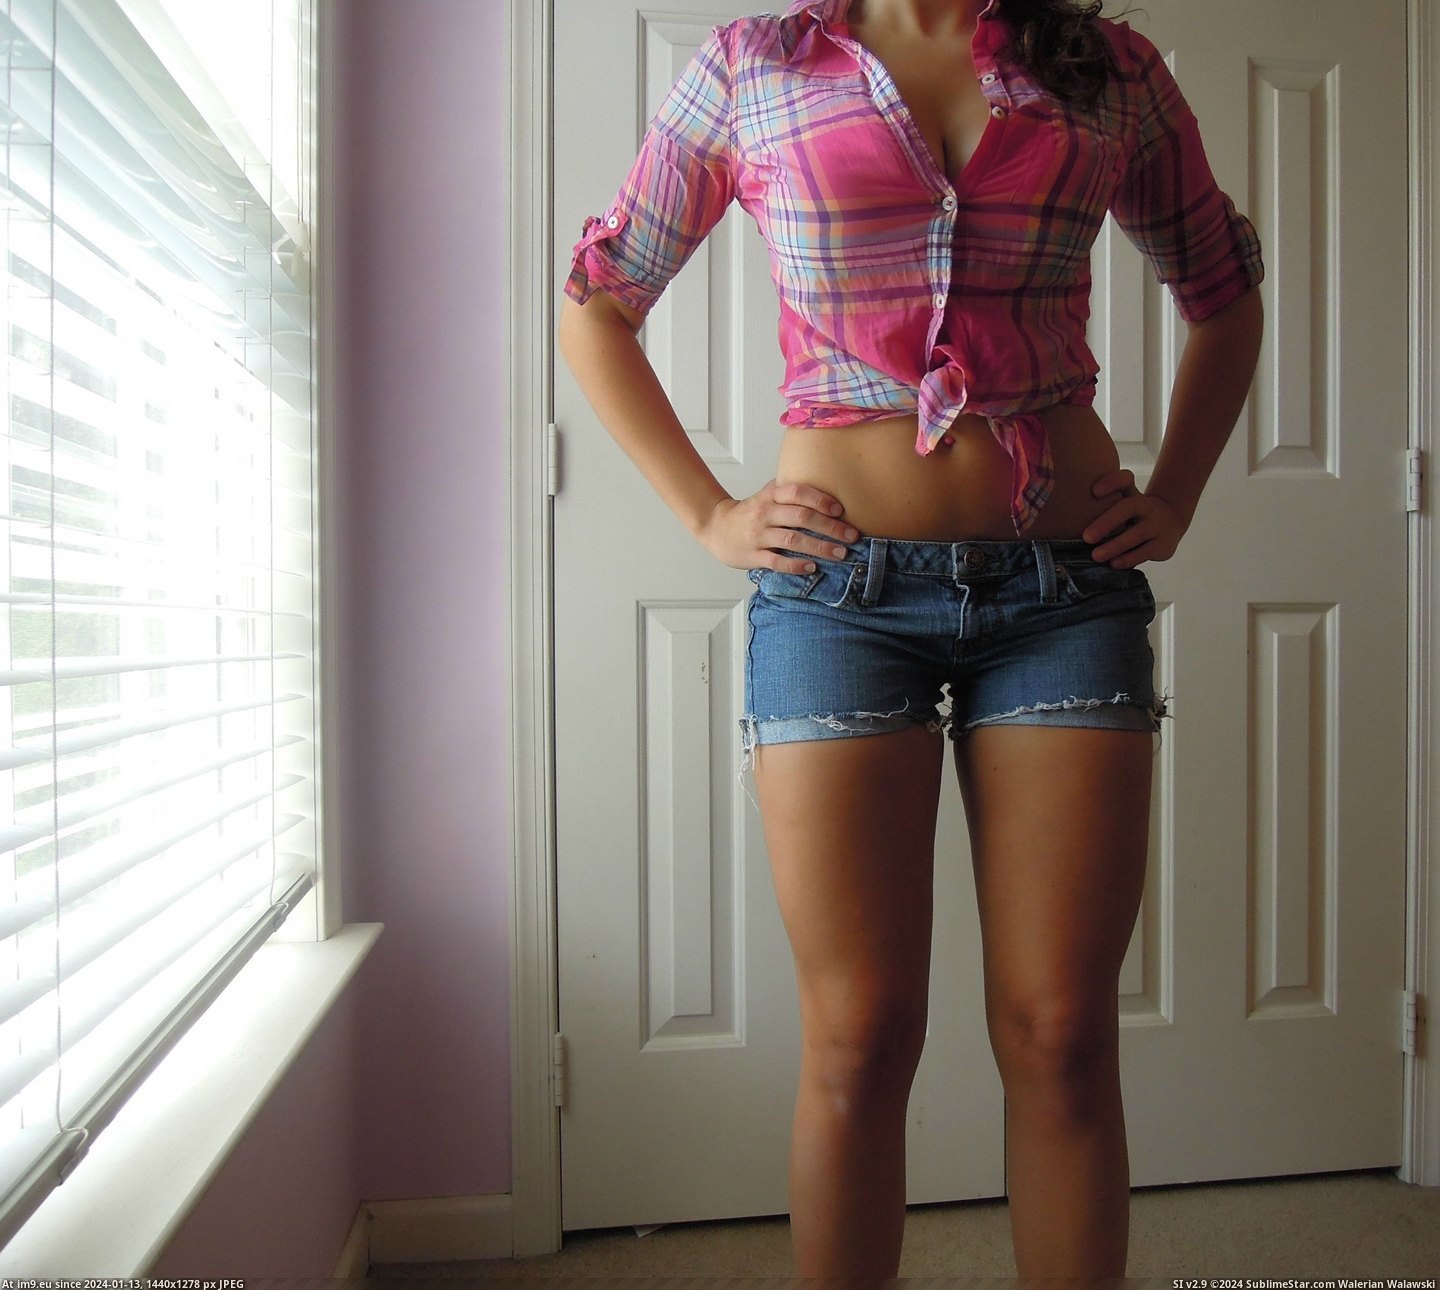 #Ass #Booty #Titties #Jean #Plaid #Shirt #Shorts [Nsfw] Jean booty shorts, a plaid shirt, ass, and titties 14 Pic. (Bild von album My r/NSFW favs))